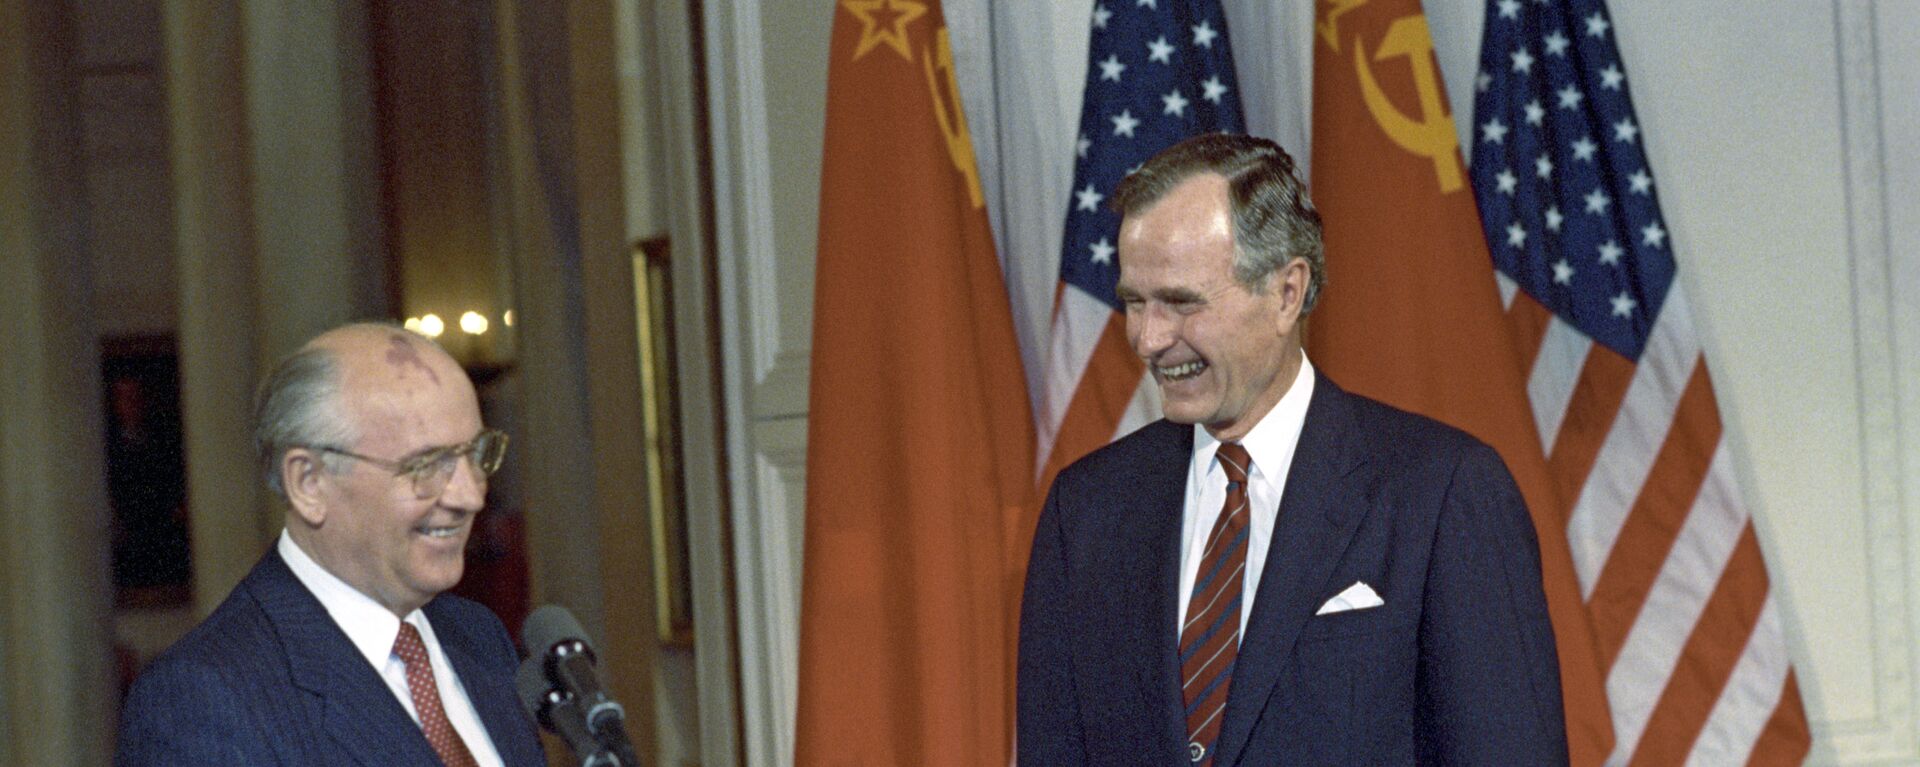 Mikhail Gorbachev và George W. Bush  - Sputnik Việt Nam, 1920, 02.04.2019